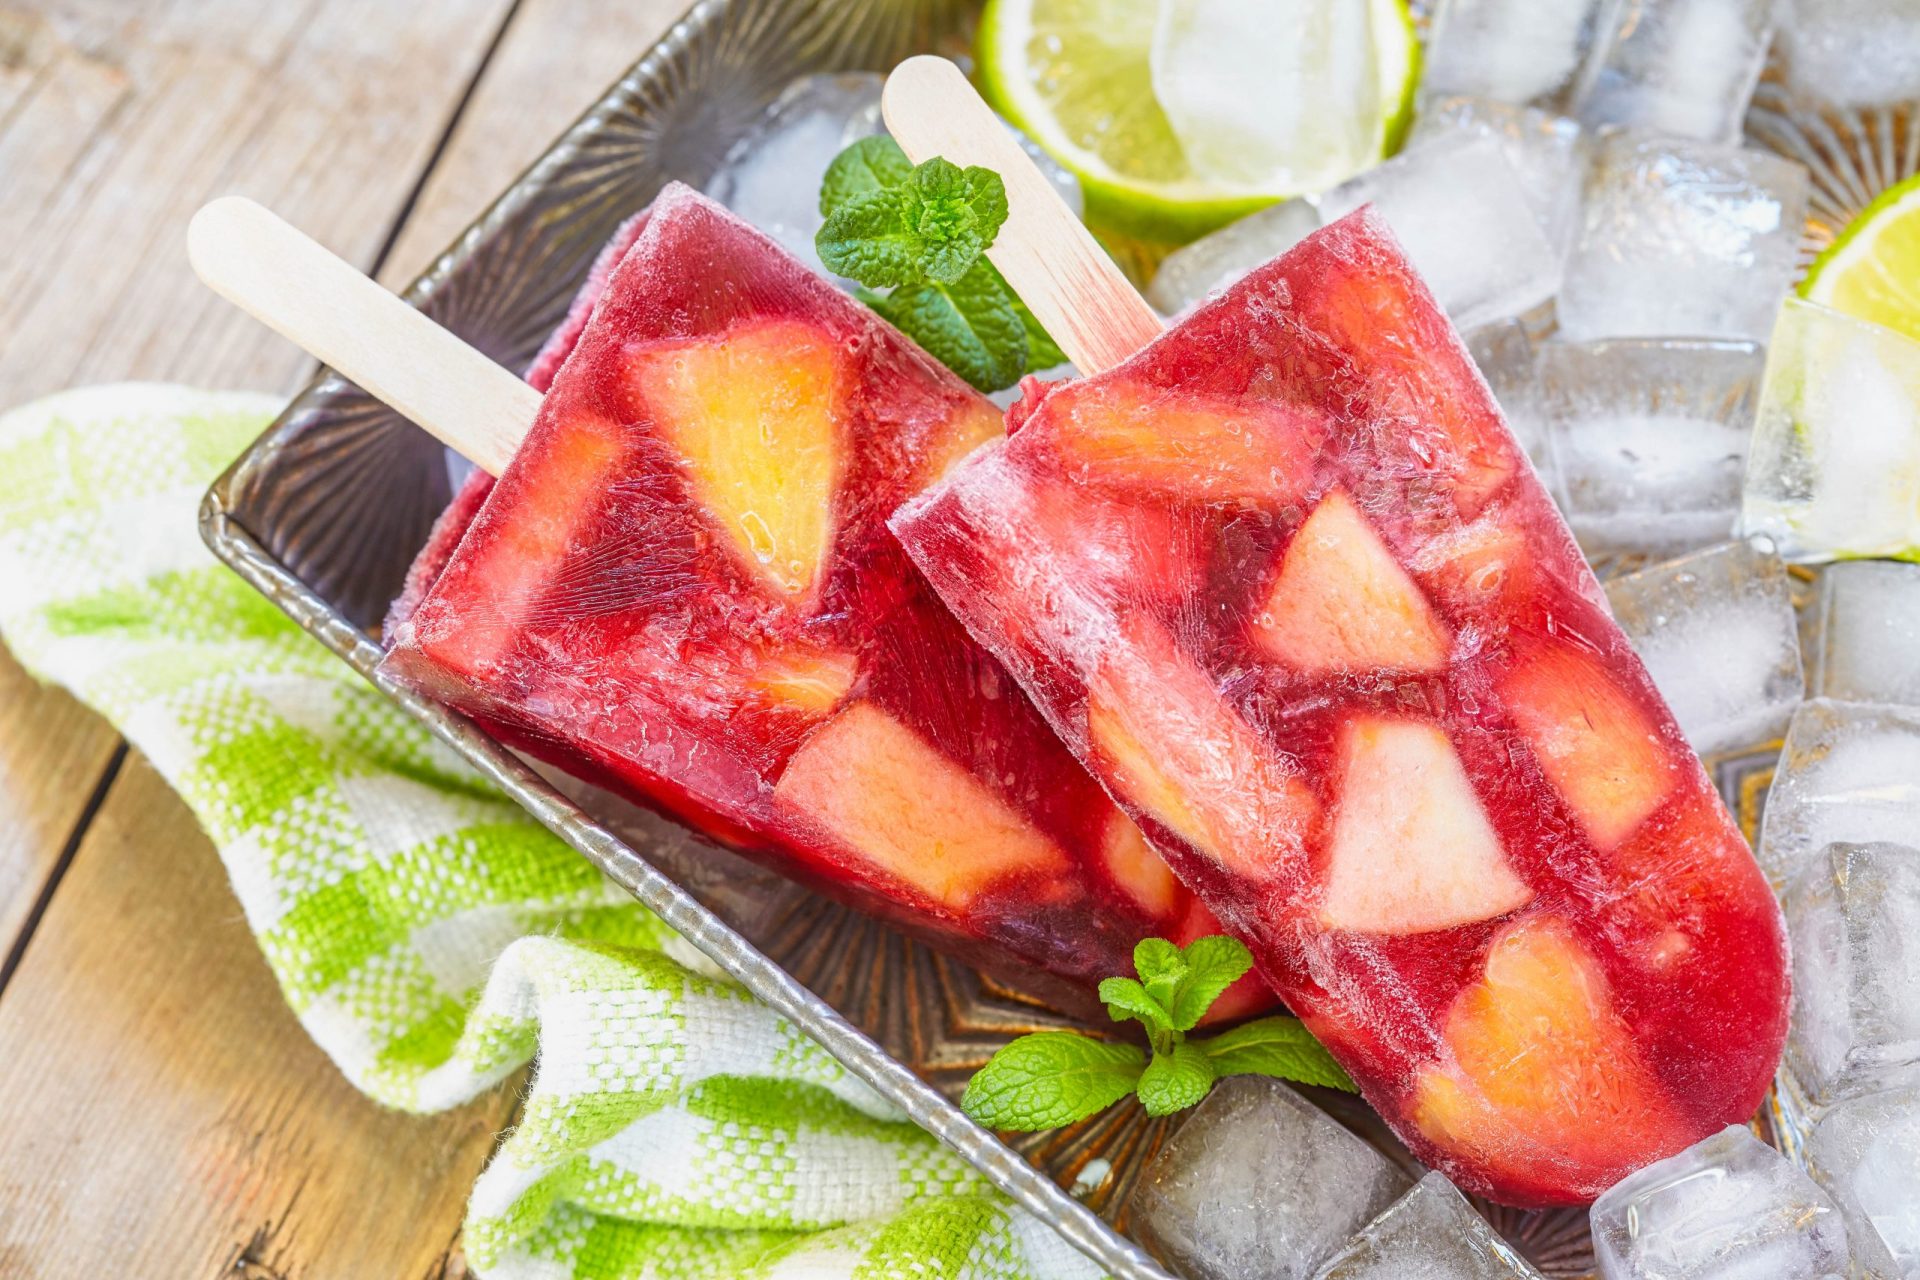 Top 10 healthy snacks to beat the summer heat